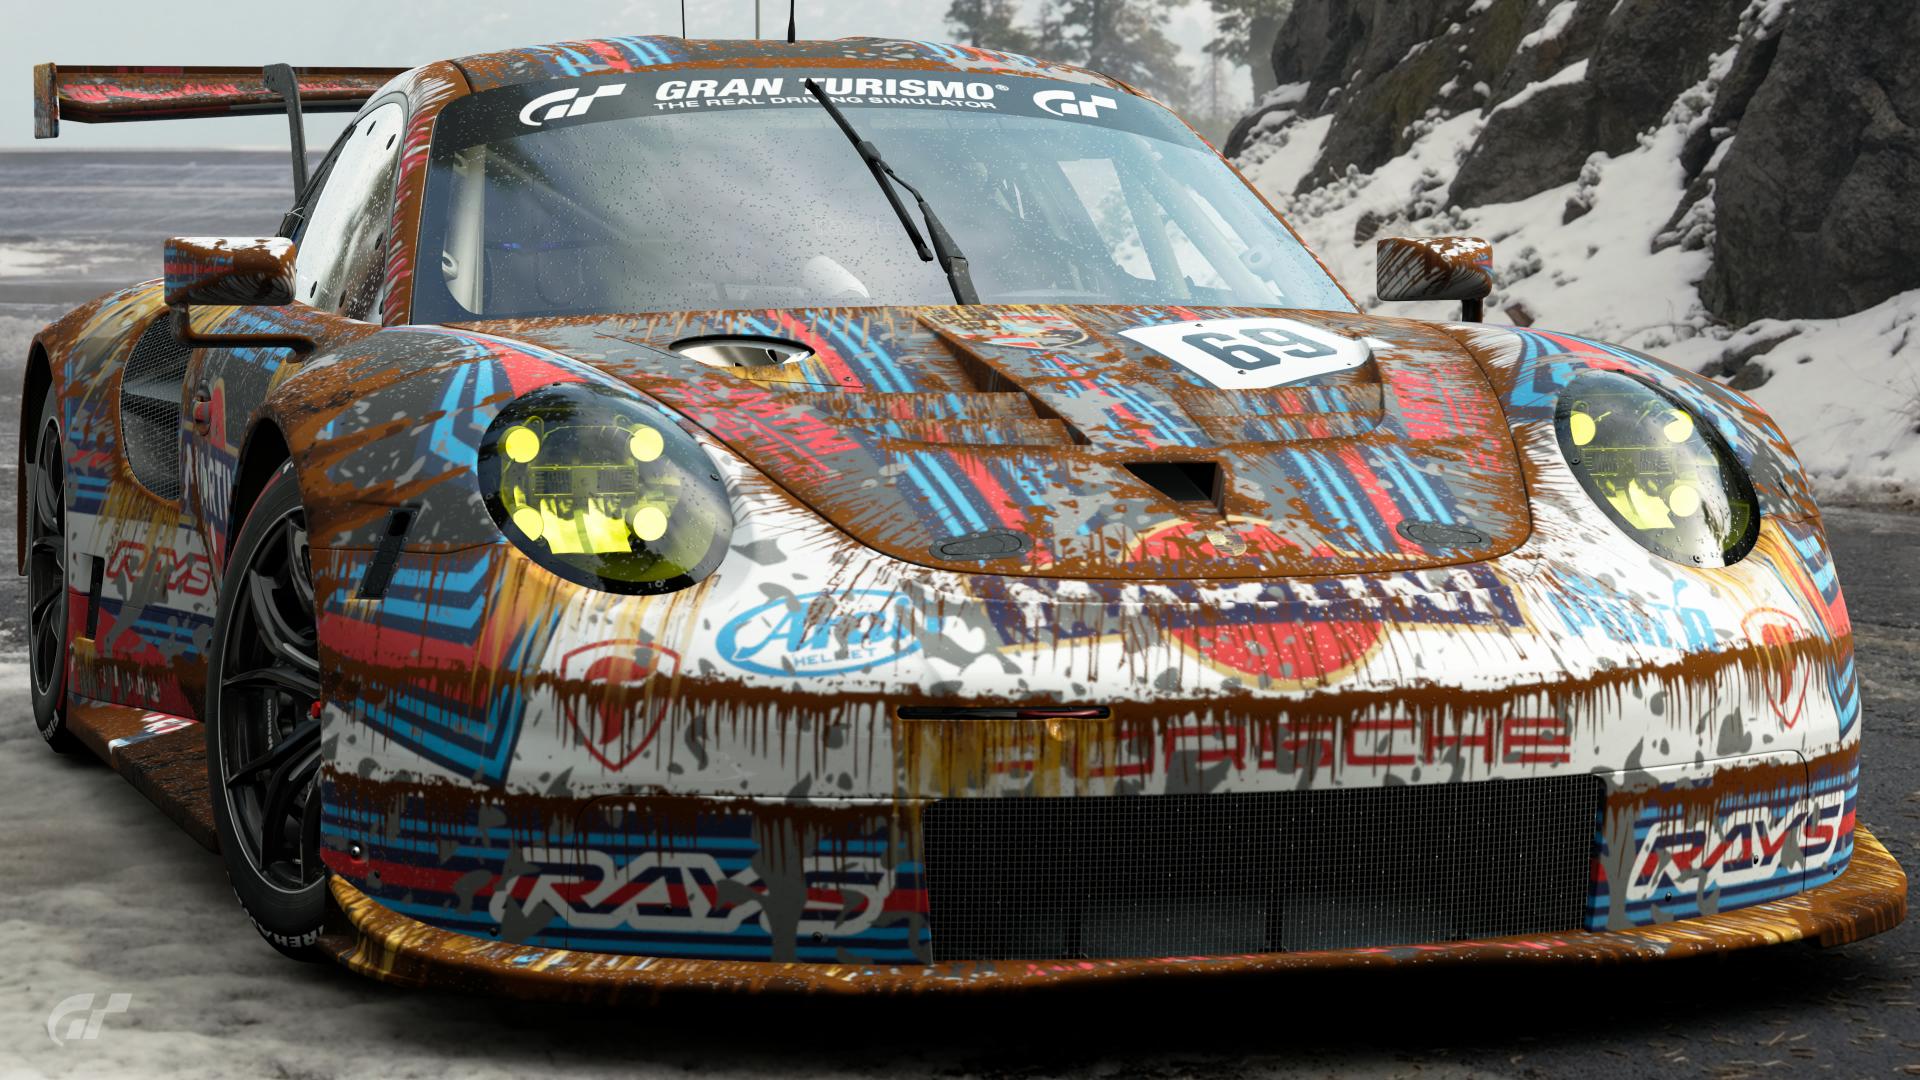 Porsche 911 gets Martini Racing Edition livery